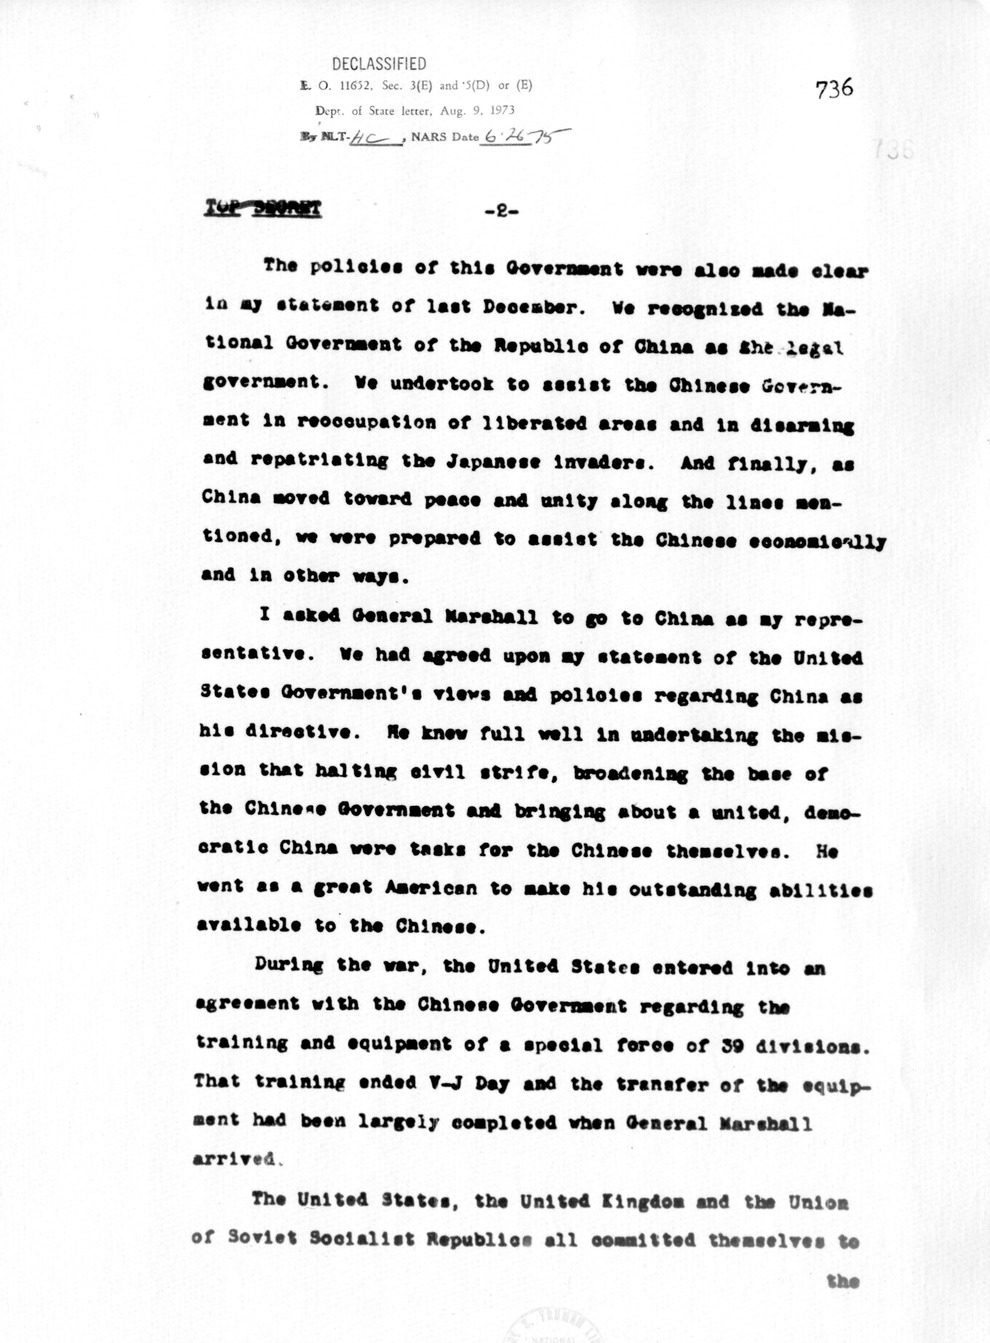 Memorandum from Dean Acheson to Secretary of War Robert Patterson, with Attachement